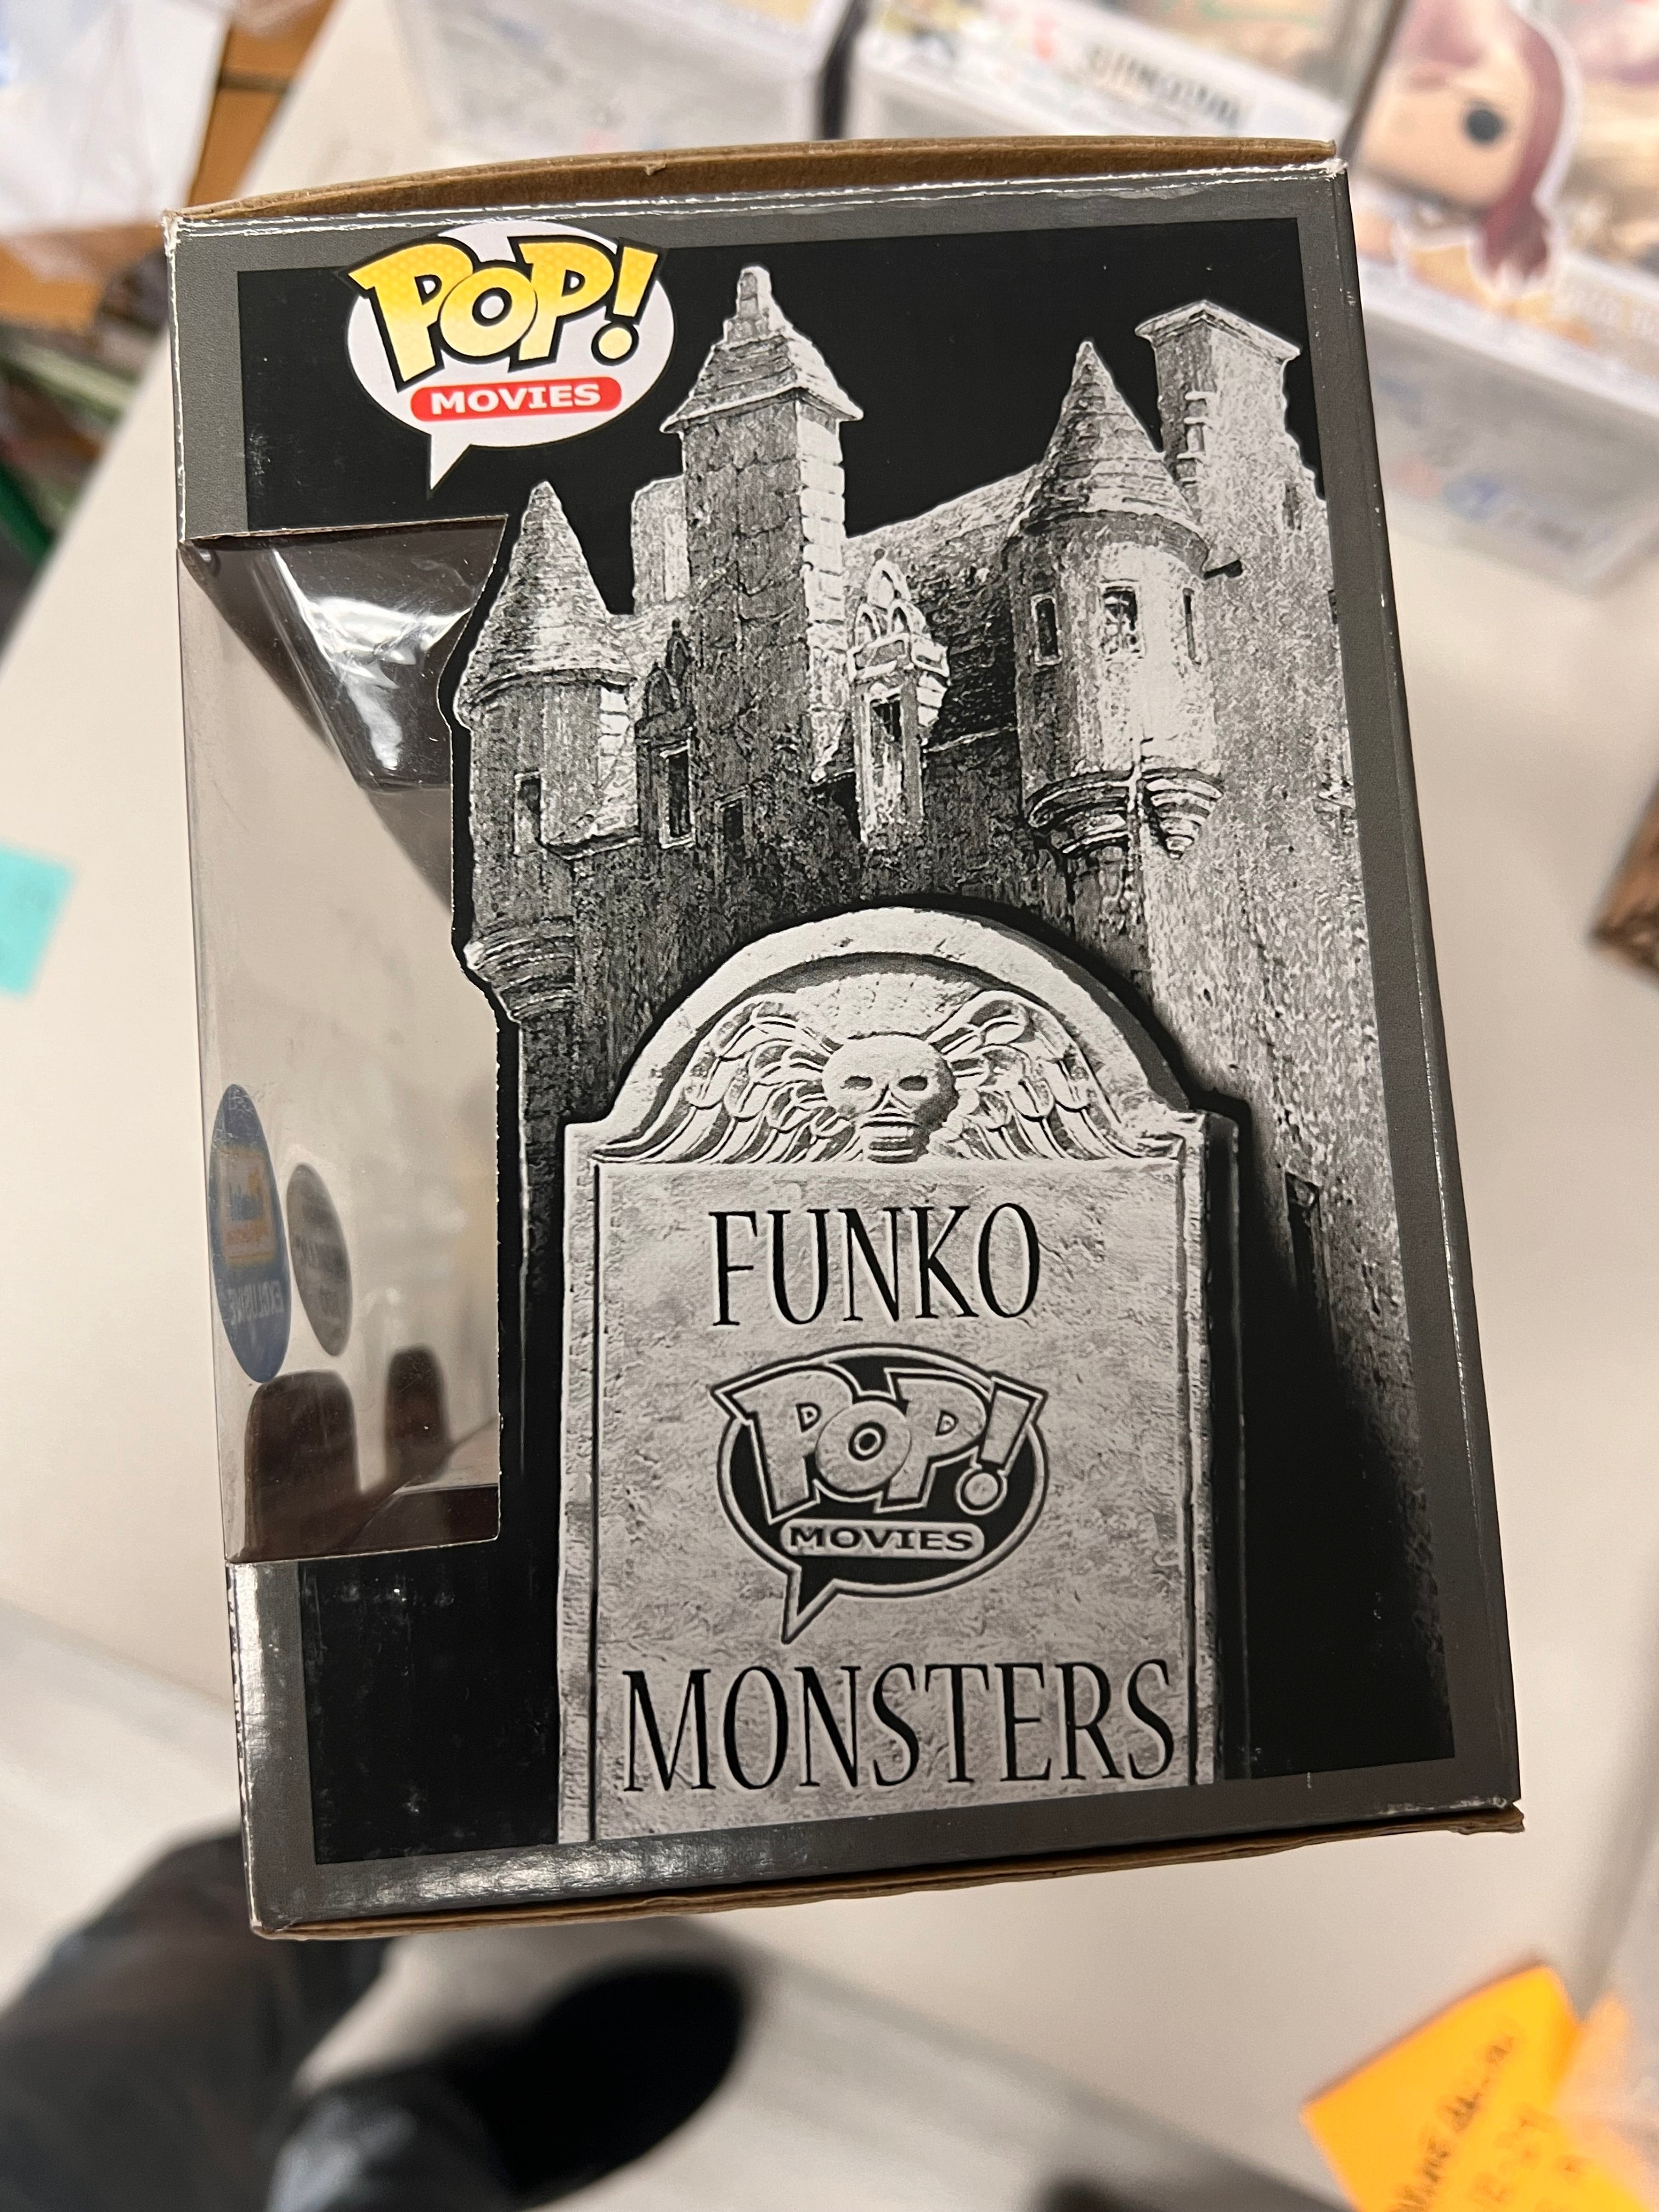 Universal Monsters 4 Pack ( Metallic)  Gemini 300 Piece Funko Pop